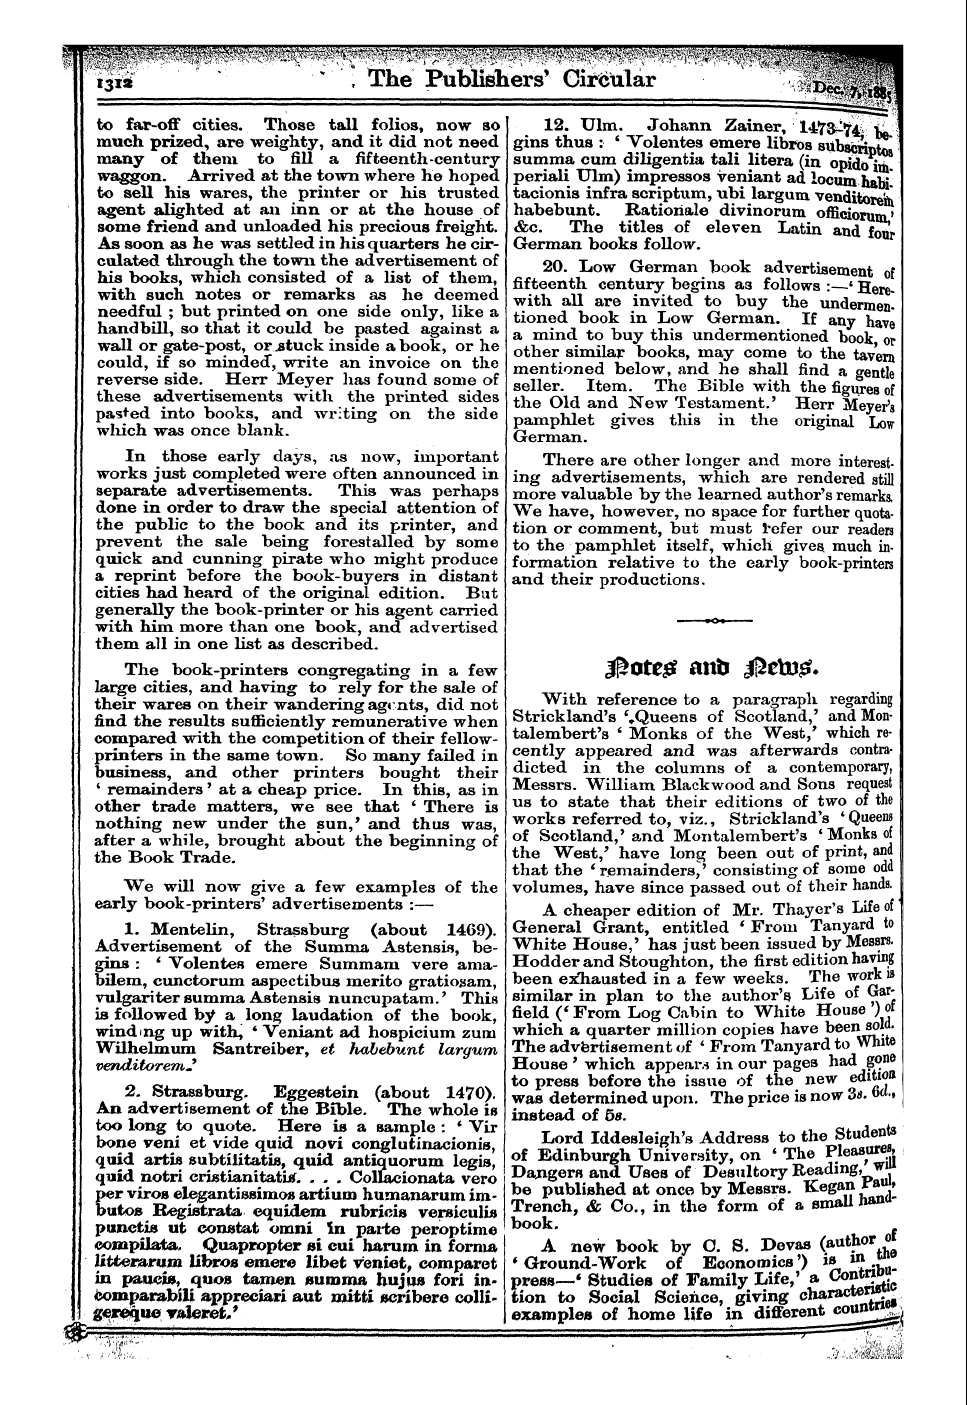 Publishers’ Circular (1880-1890): jS F Y, 1st edition - £>Otc$ Anb £*E\Xsg.